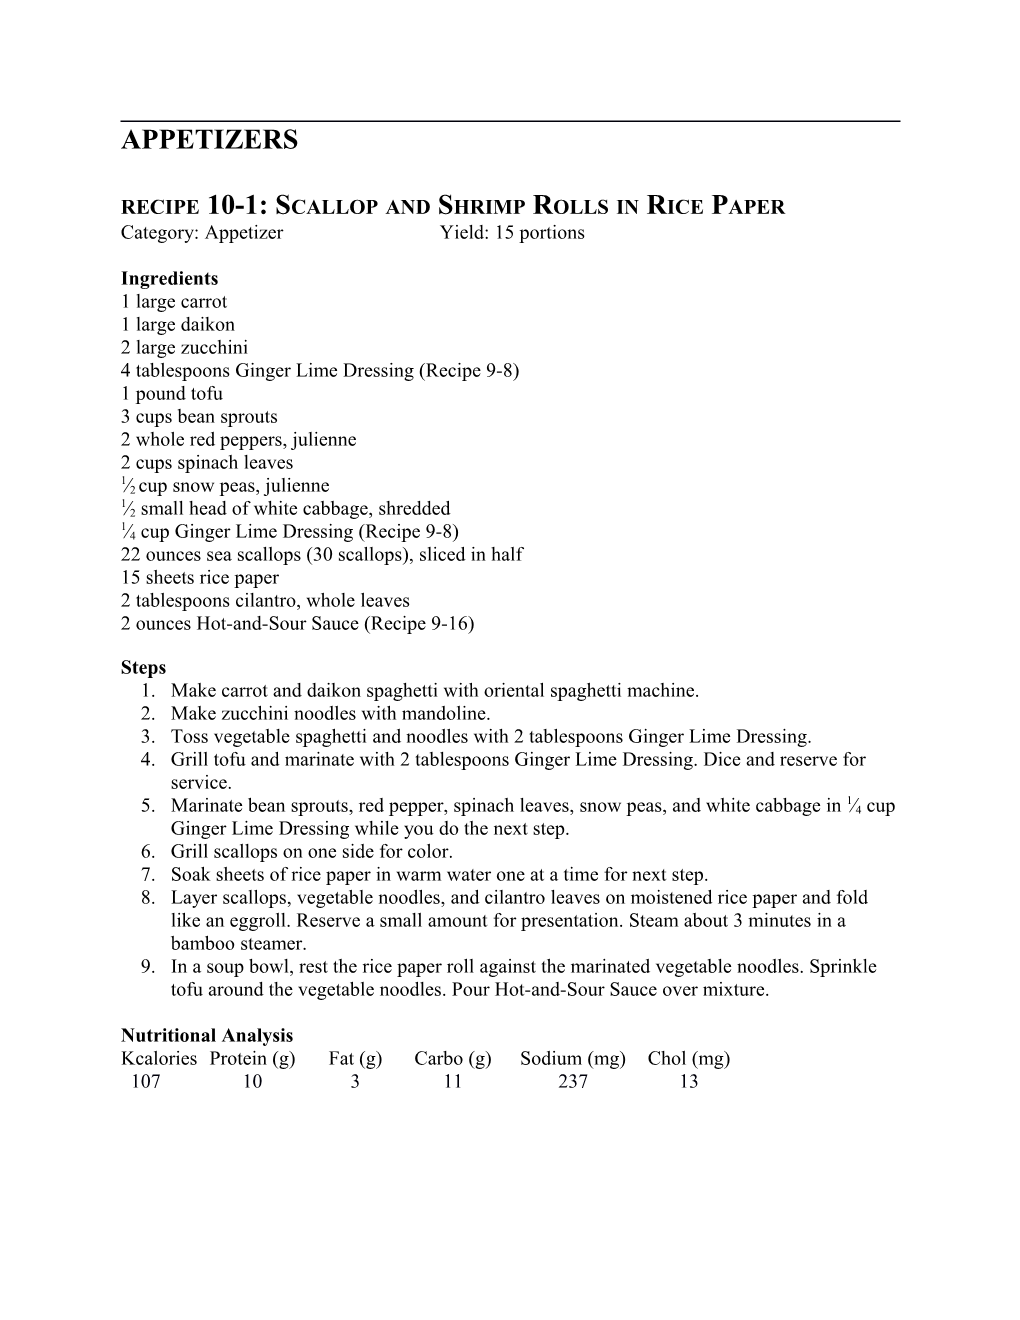 Recipe 10-1: Scallop and Shrimp Rolls in Rice Paper